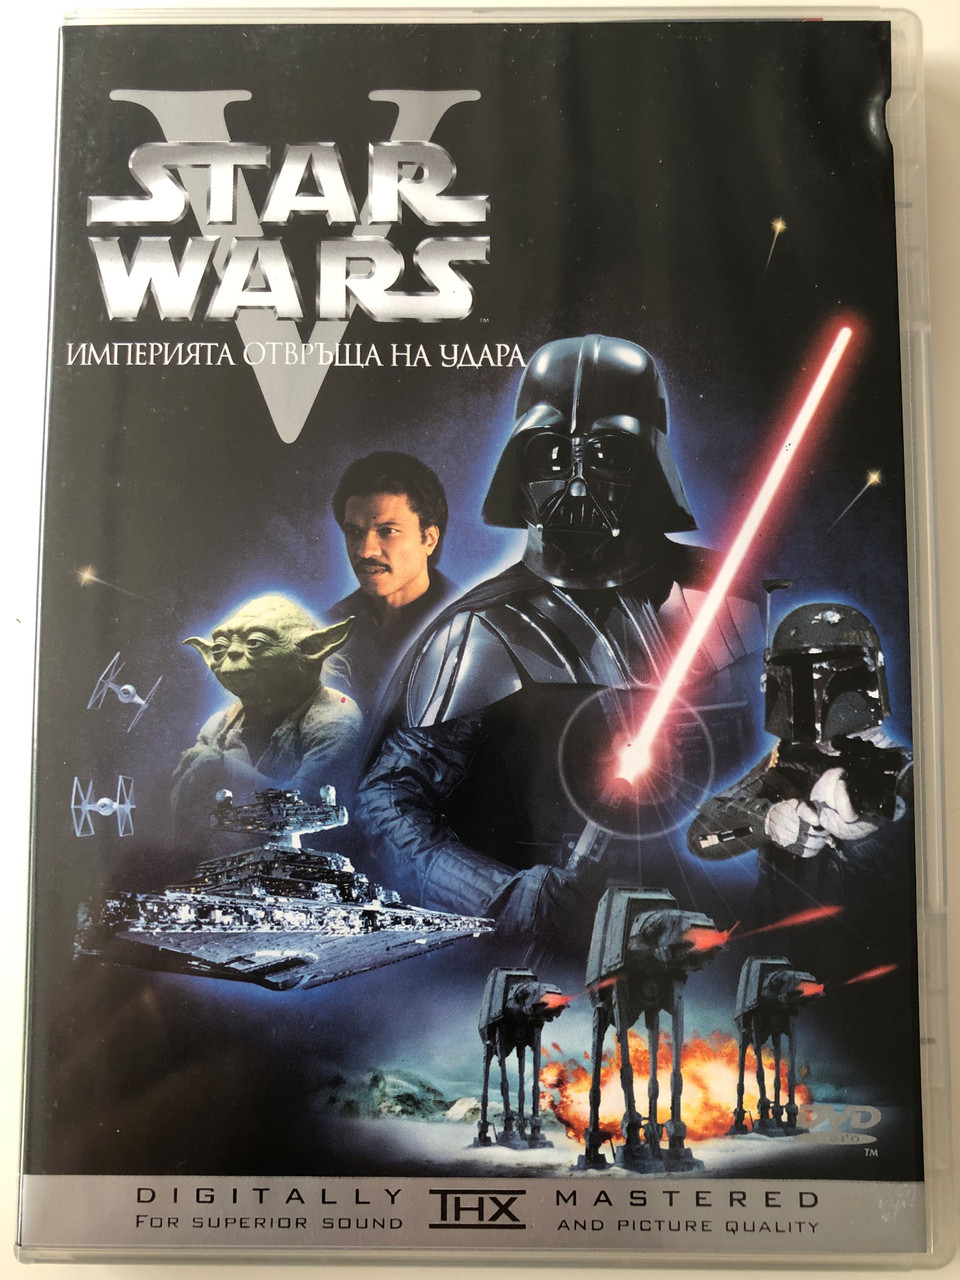 Star Wars V The Empire Strikes Back DVD 1980 Империята отвръща на удара /  Directed by Irvin Kershner / Starring: Mark Hamill, Harrison Ford, Carrie  Fisher / Bulgarian DVD - bibleinmylanguage